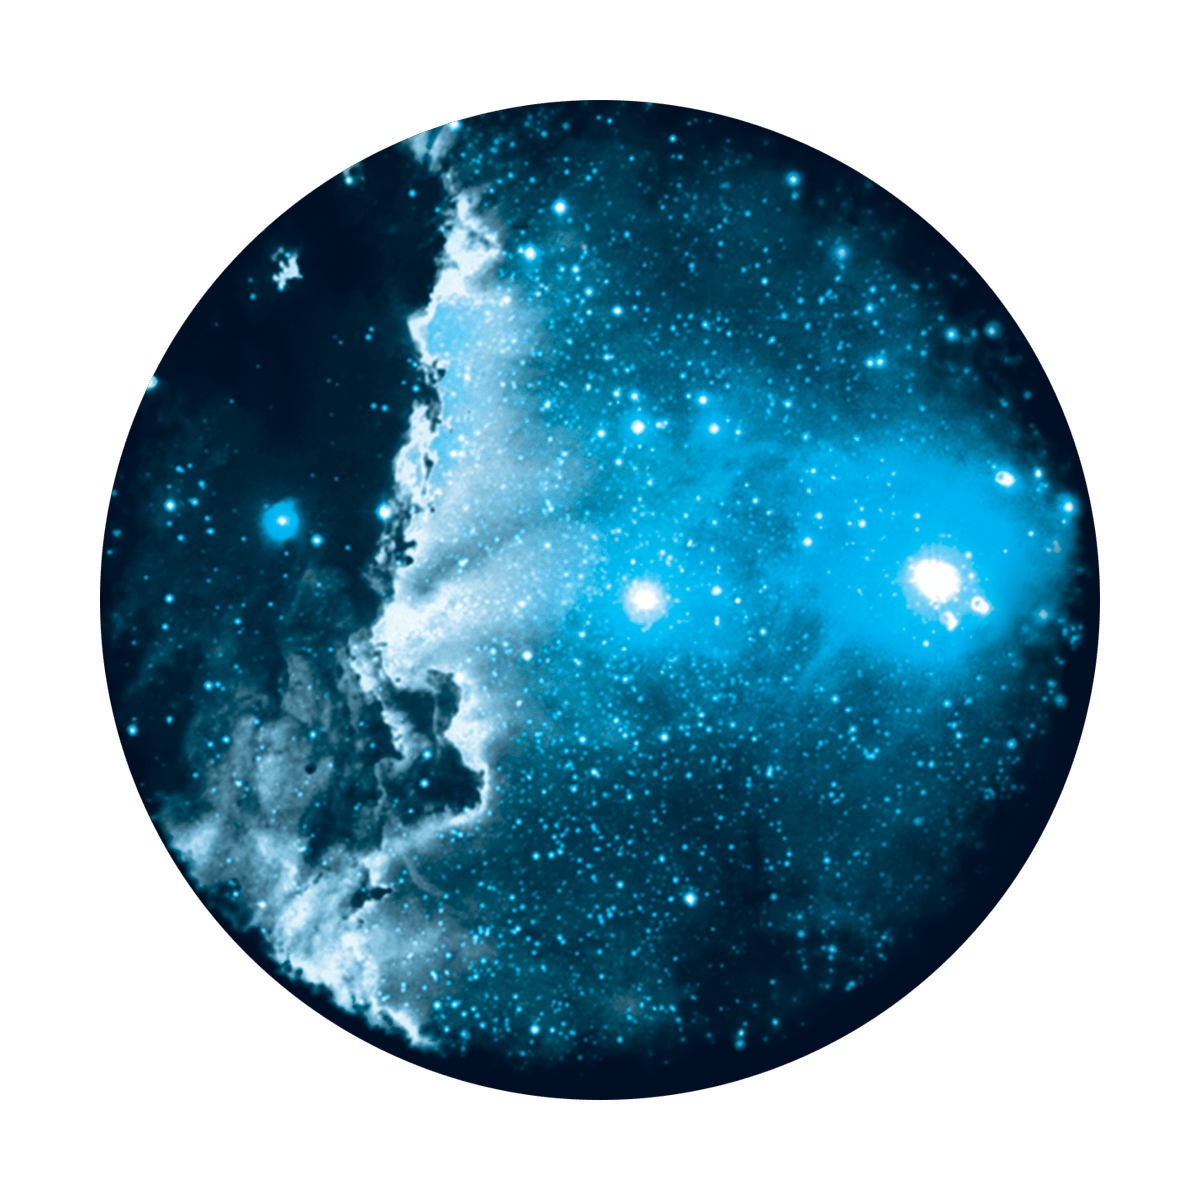 C2-0016 Star Cluster